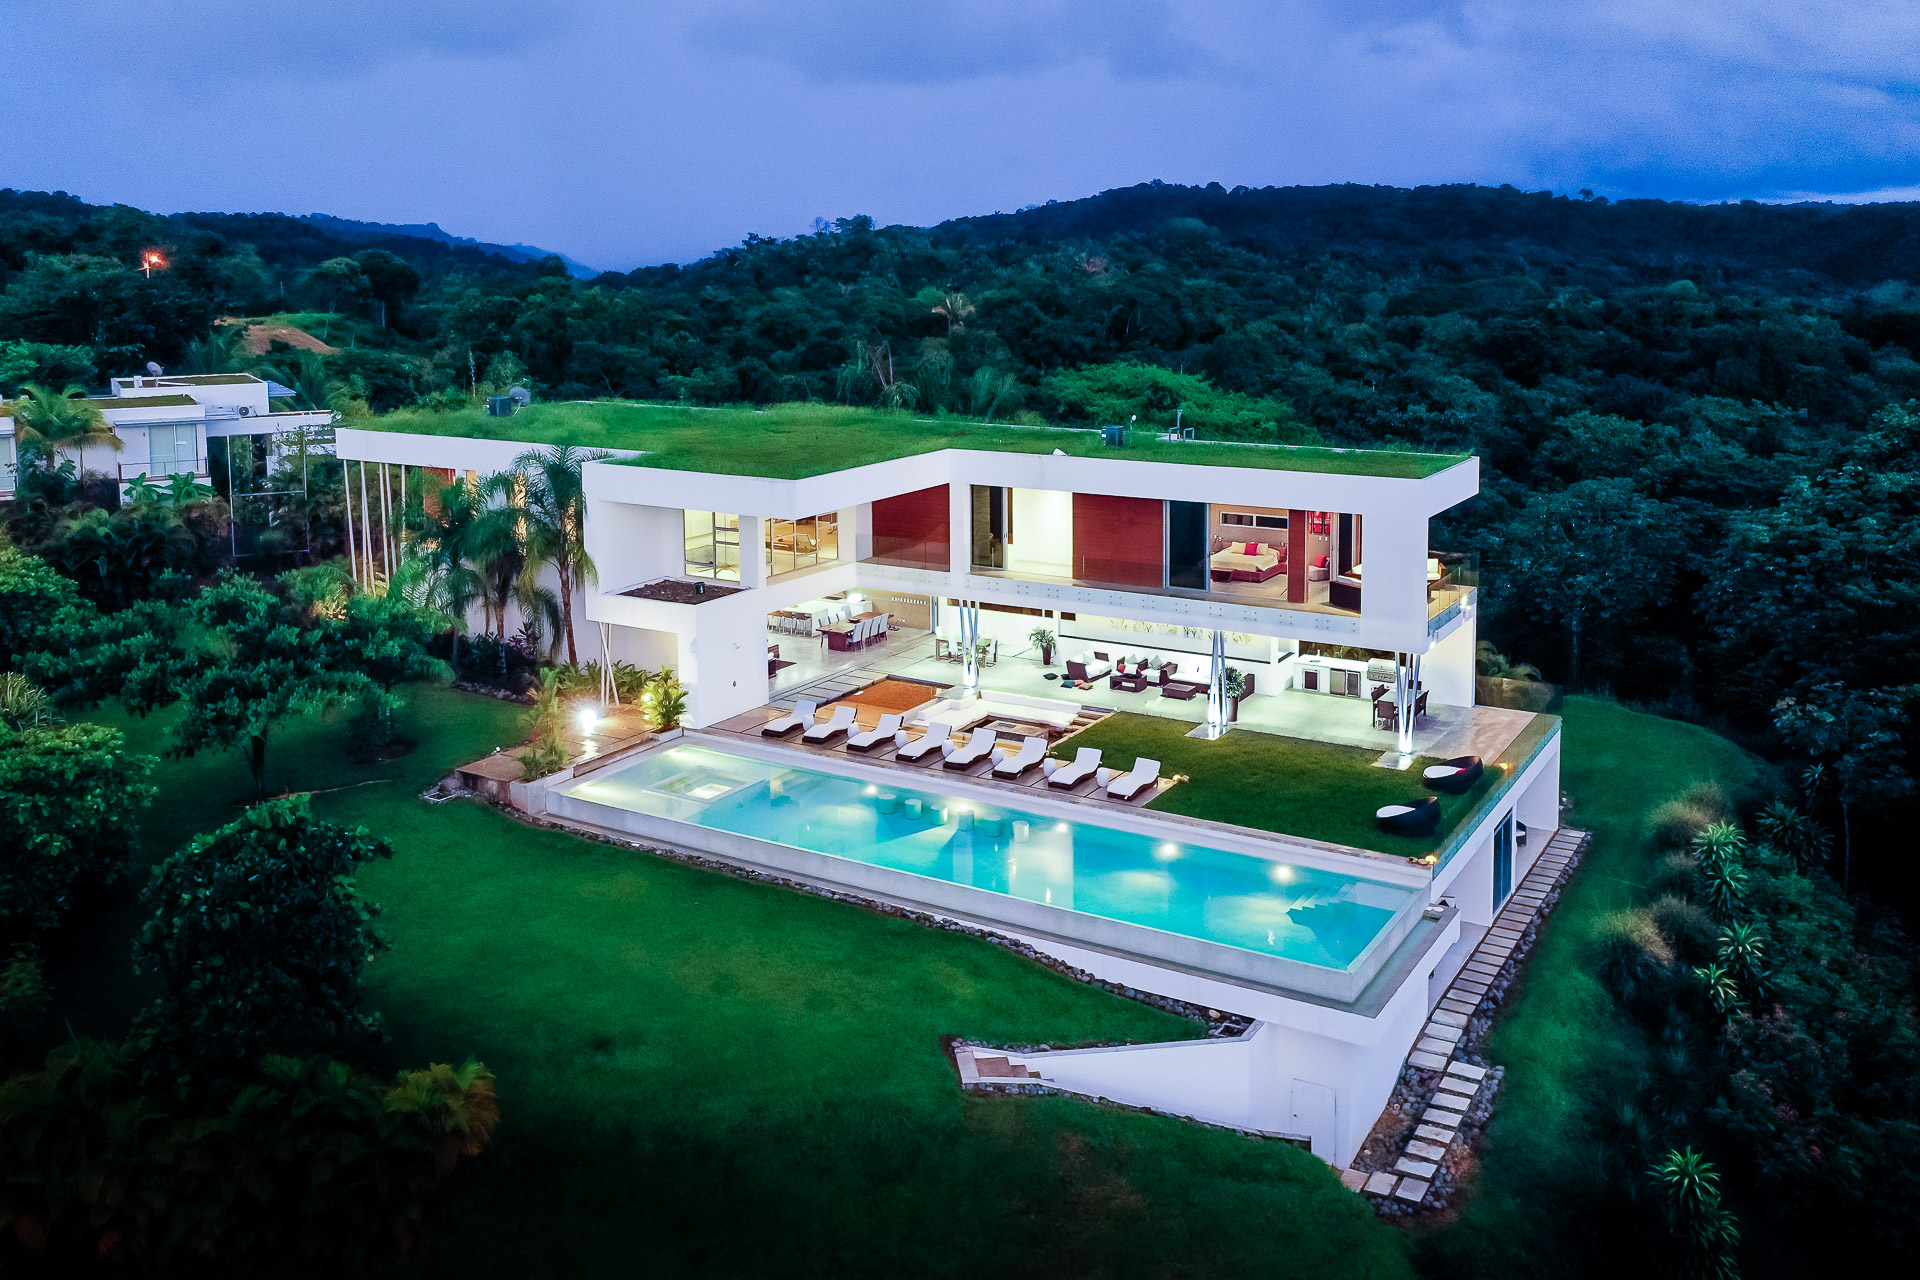 Modern architecture-meets jungle-costa rica-for sale.jpg